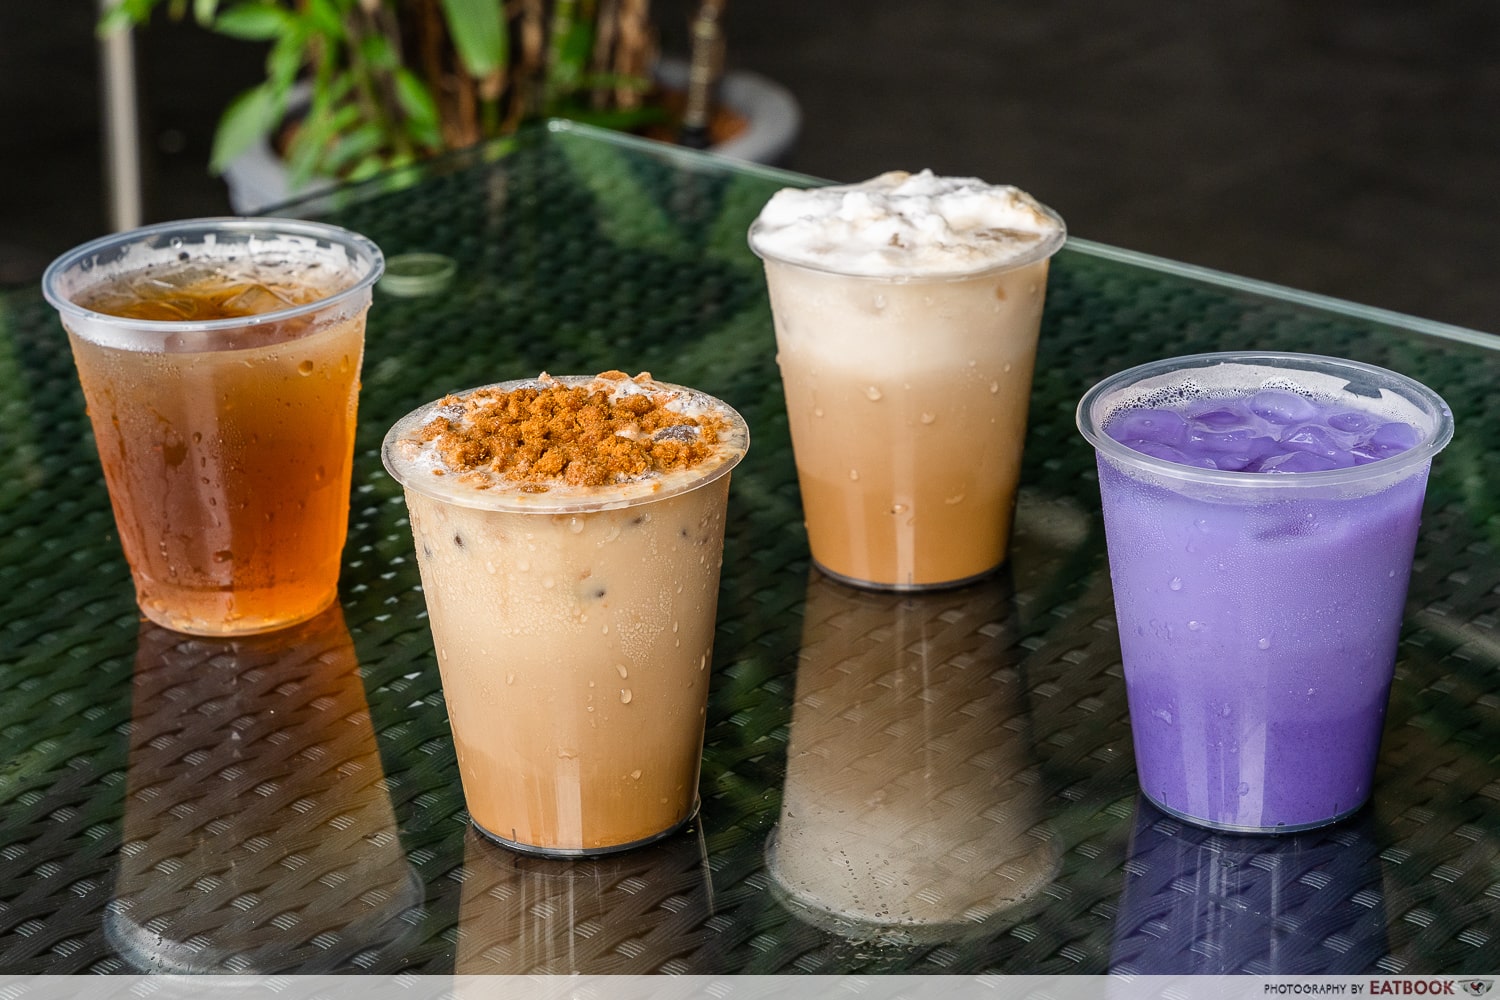 khoon coffeehouse express - drinks